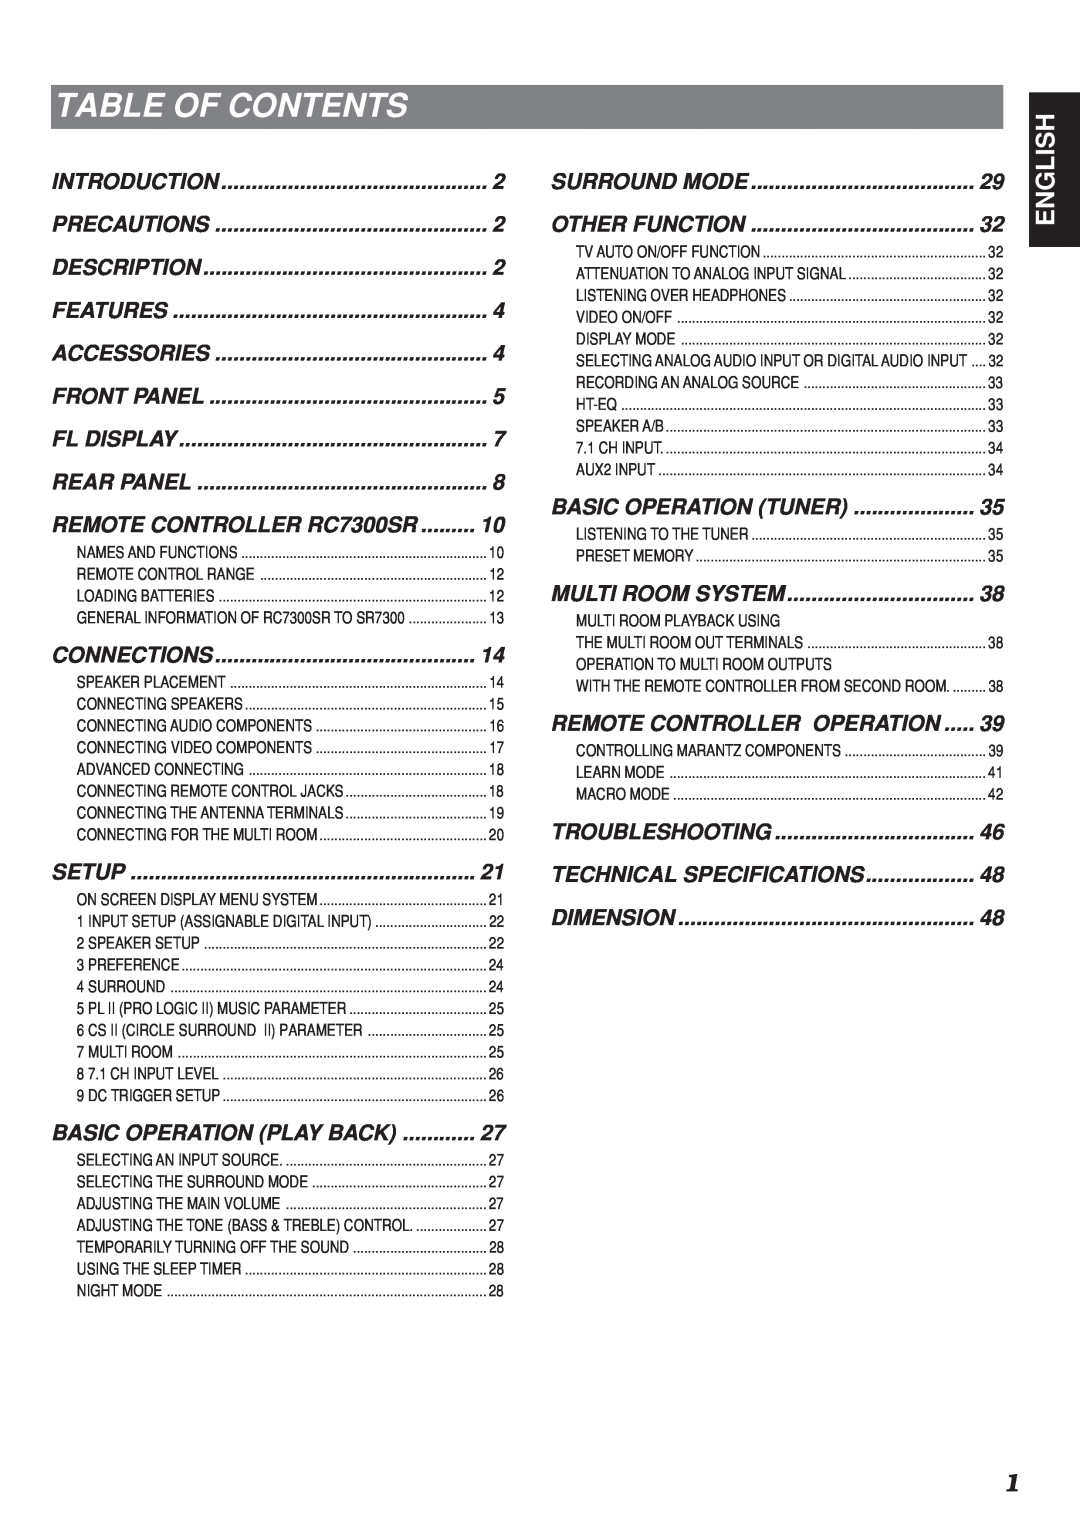 Marantz SR7300OSE manual Table Of Contents, English 